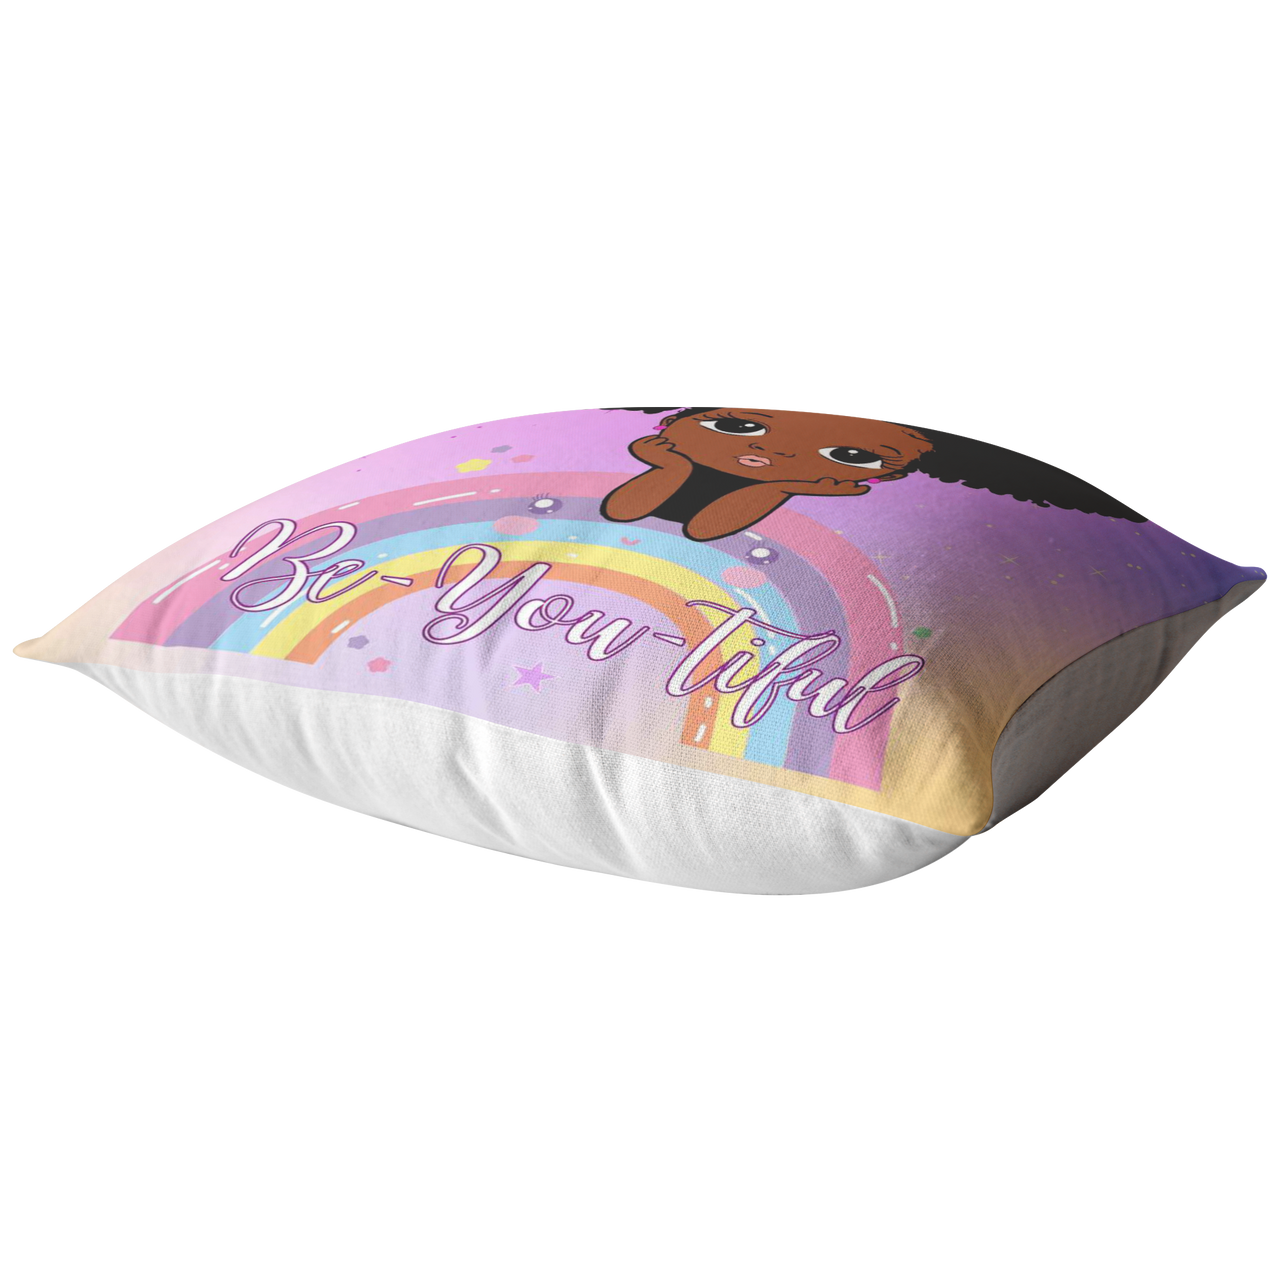 The Be-YOU-tiful Unicorn Girl Pillow - Purple/Yellow